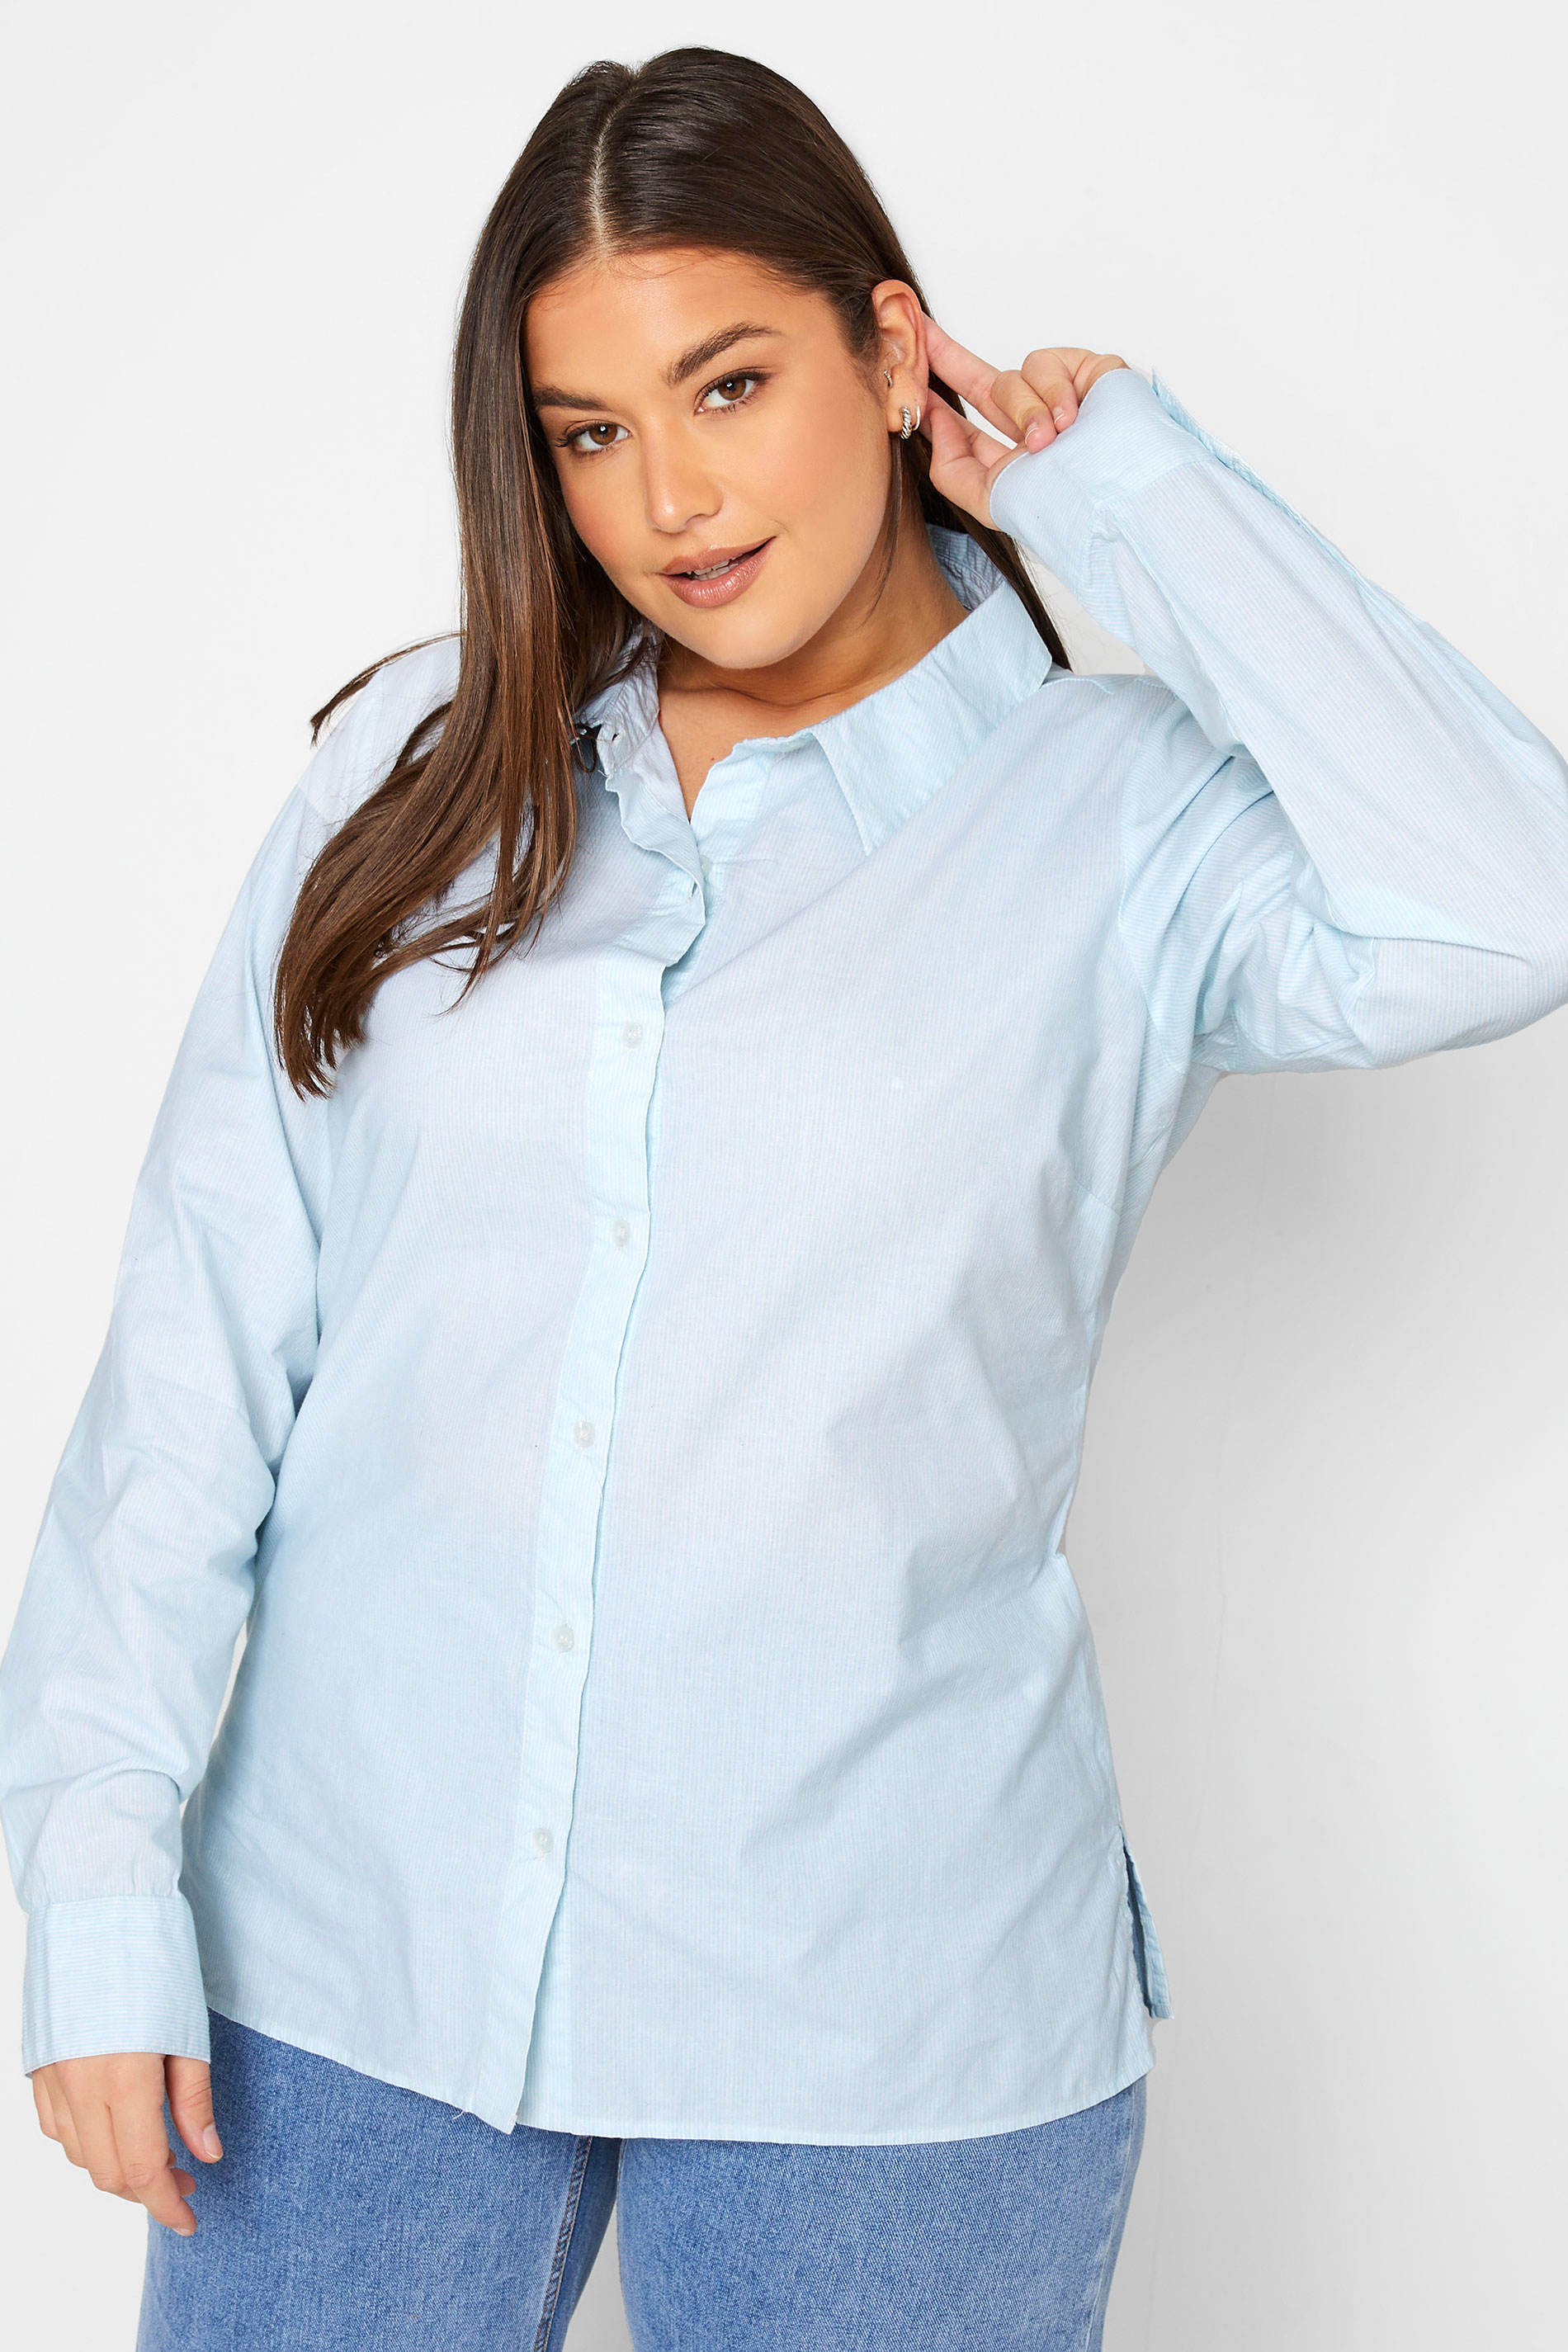 LTS Tall Women's Blue Stripe Fitted Shirt | Long Tall Sally 1